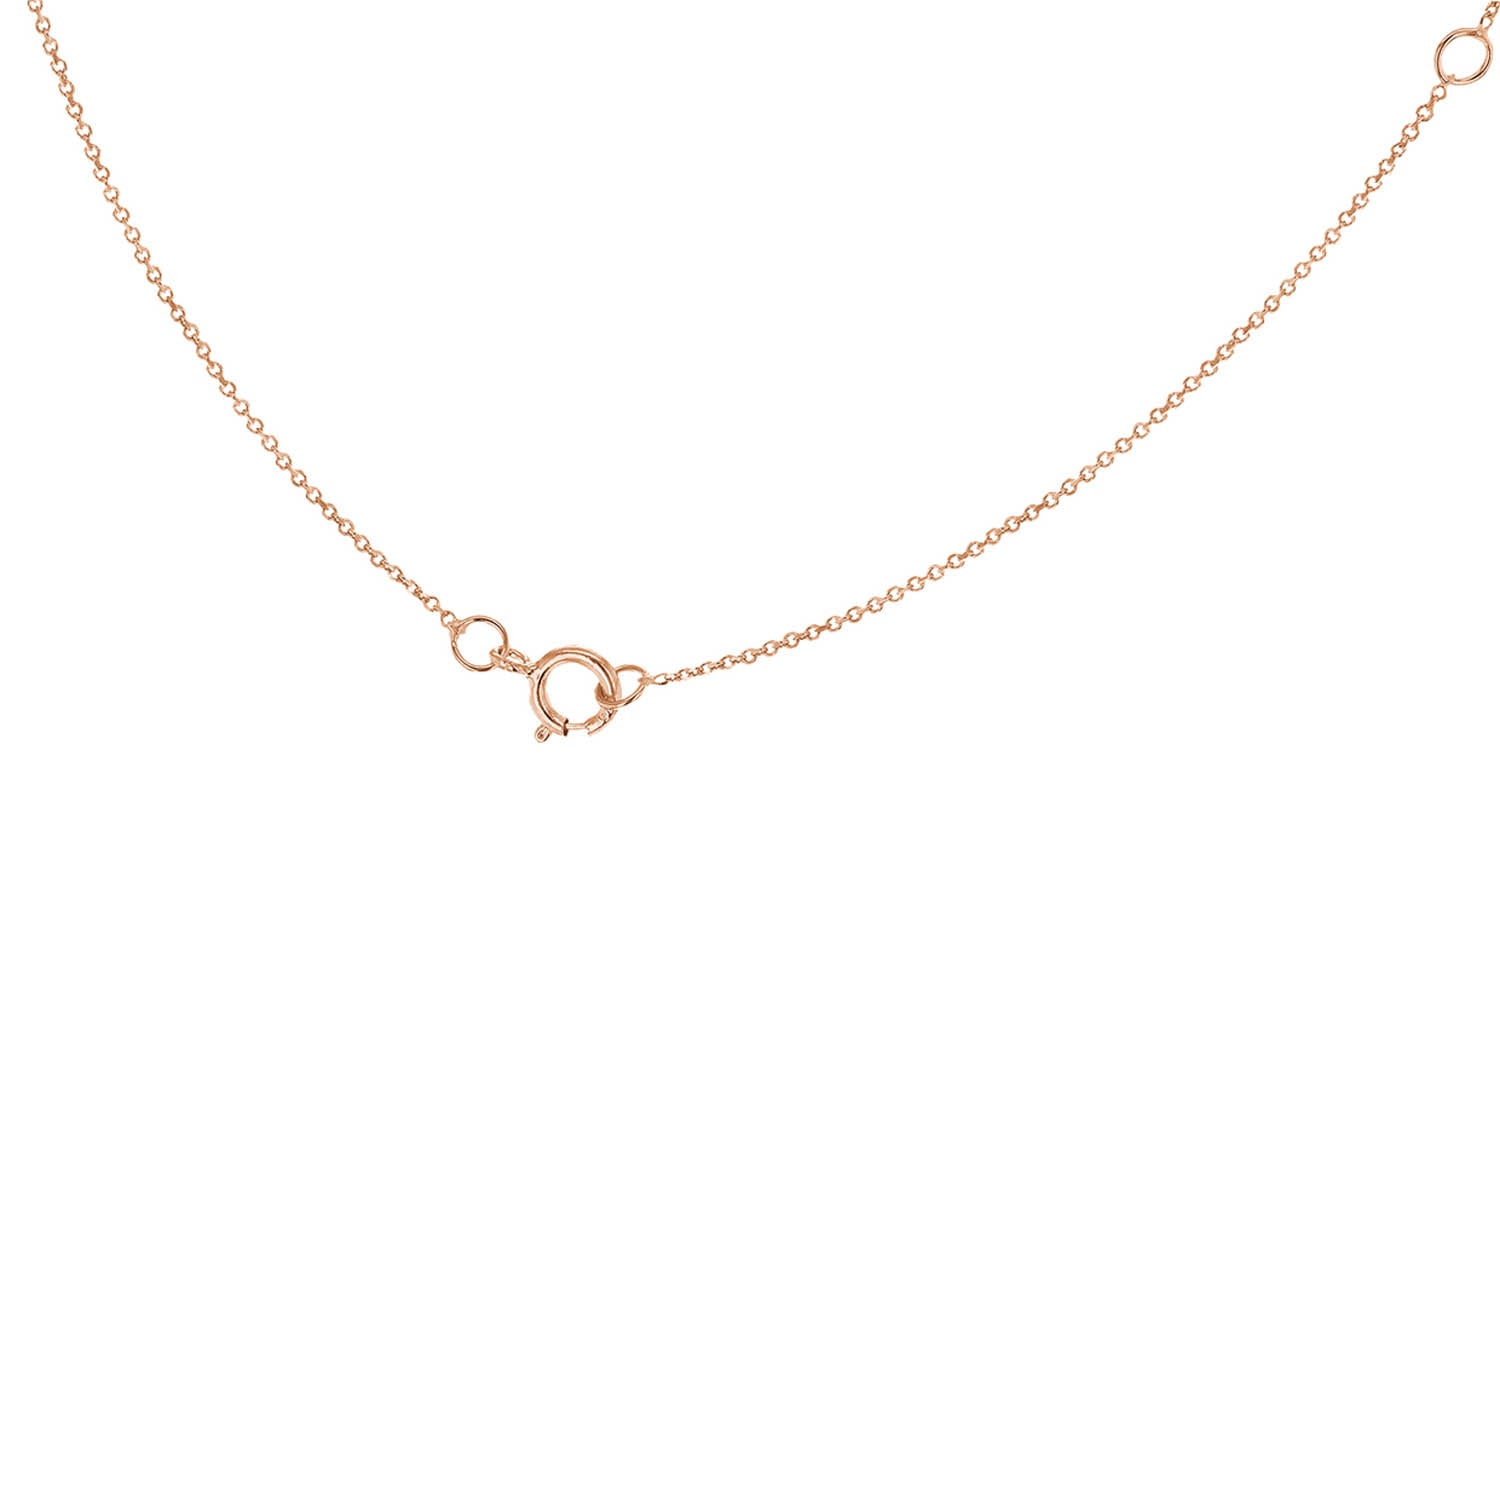 9ct Rose Gold 'N' Initial Adjustable Letter Necklace 38/43cm